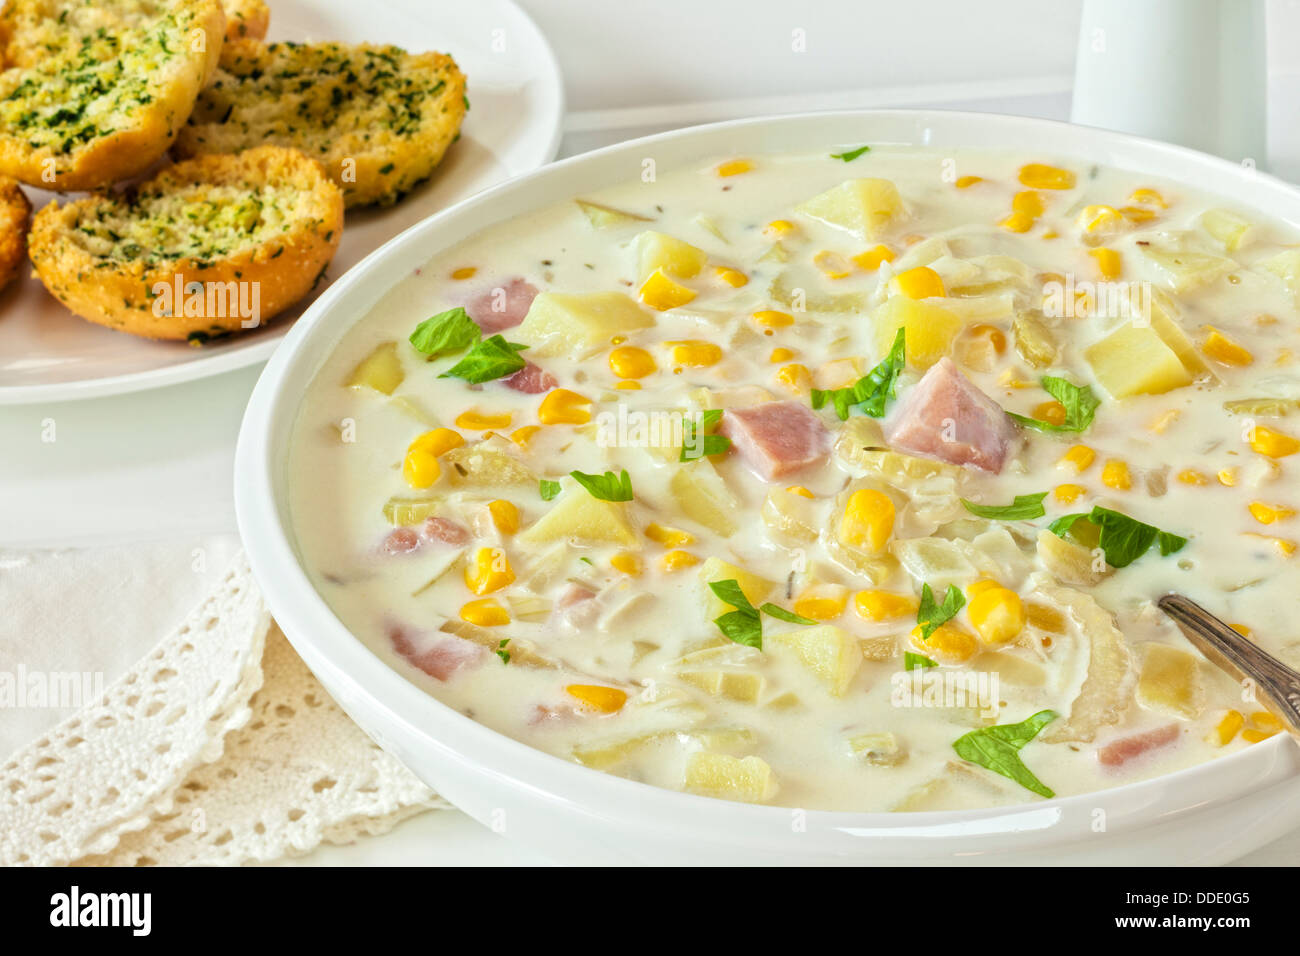 Corn Chowder - creamy corn chowder with ham and potatoes, served with crunchy garlic bread. Stock Photo